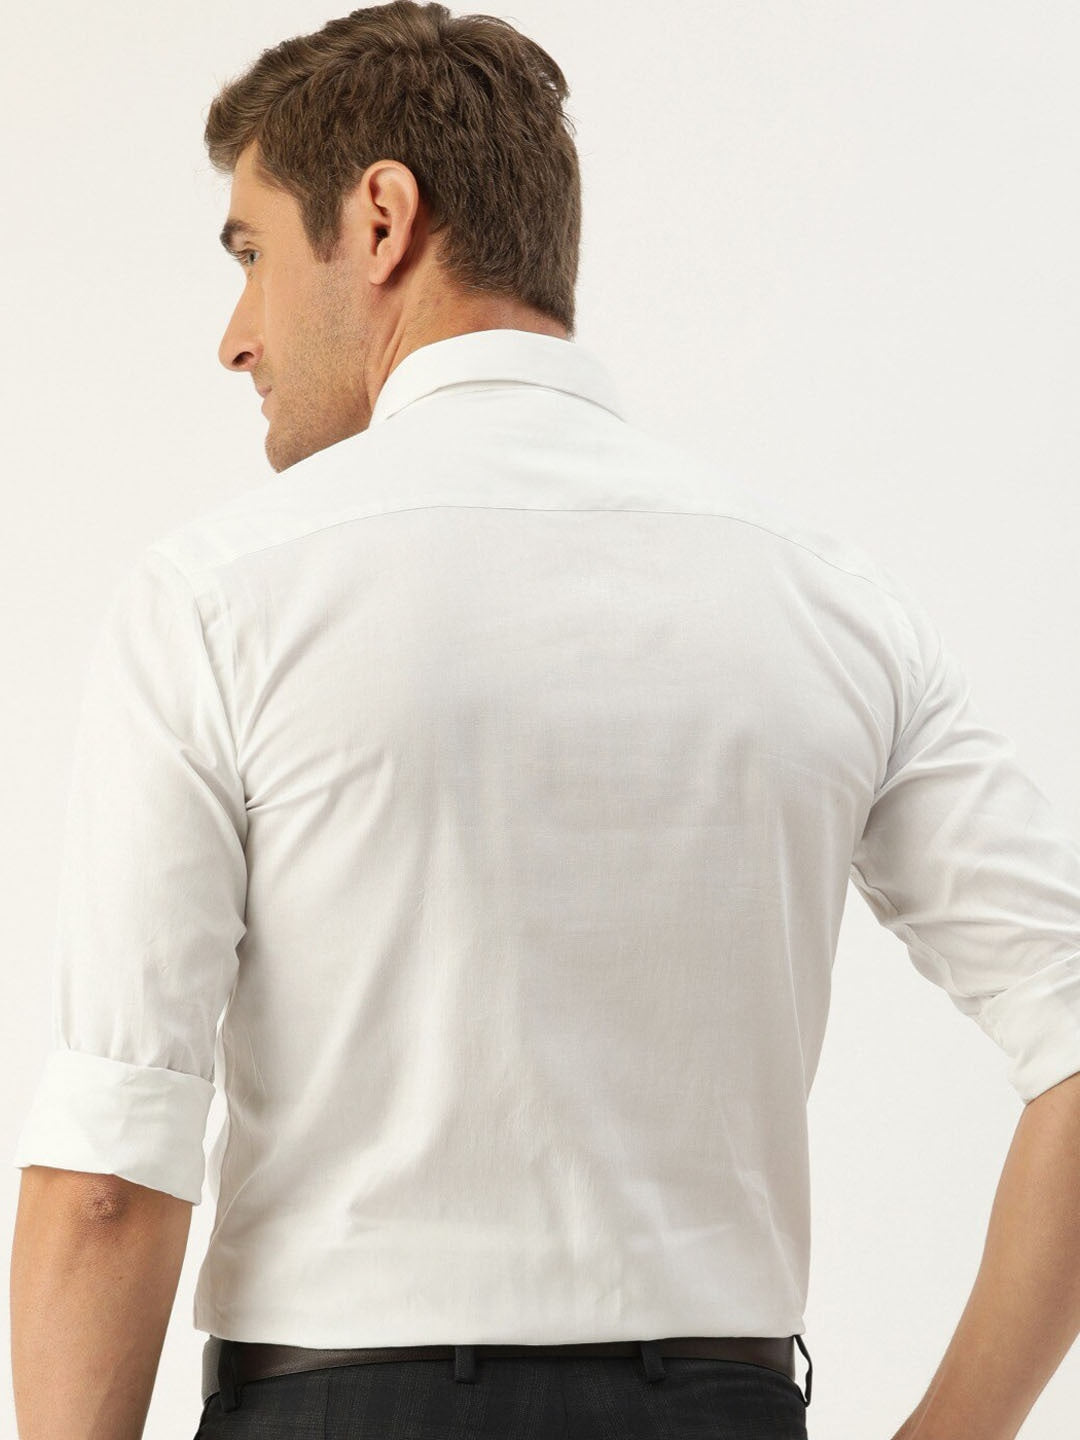 Men White Solids Pure Cotton Slim Fit Formal Shirt